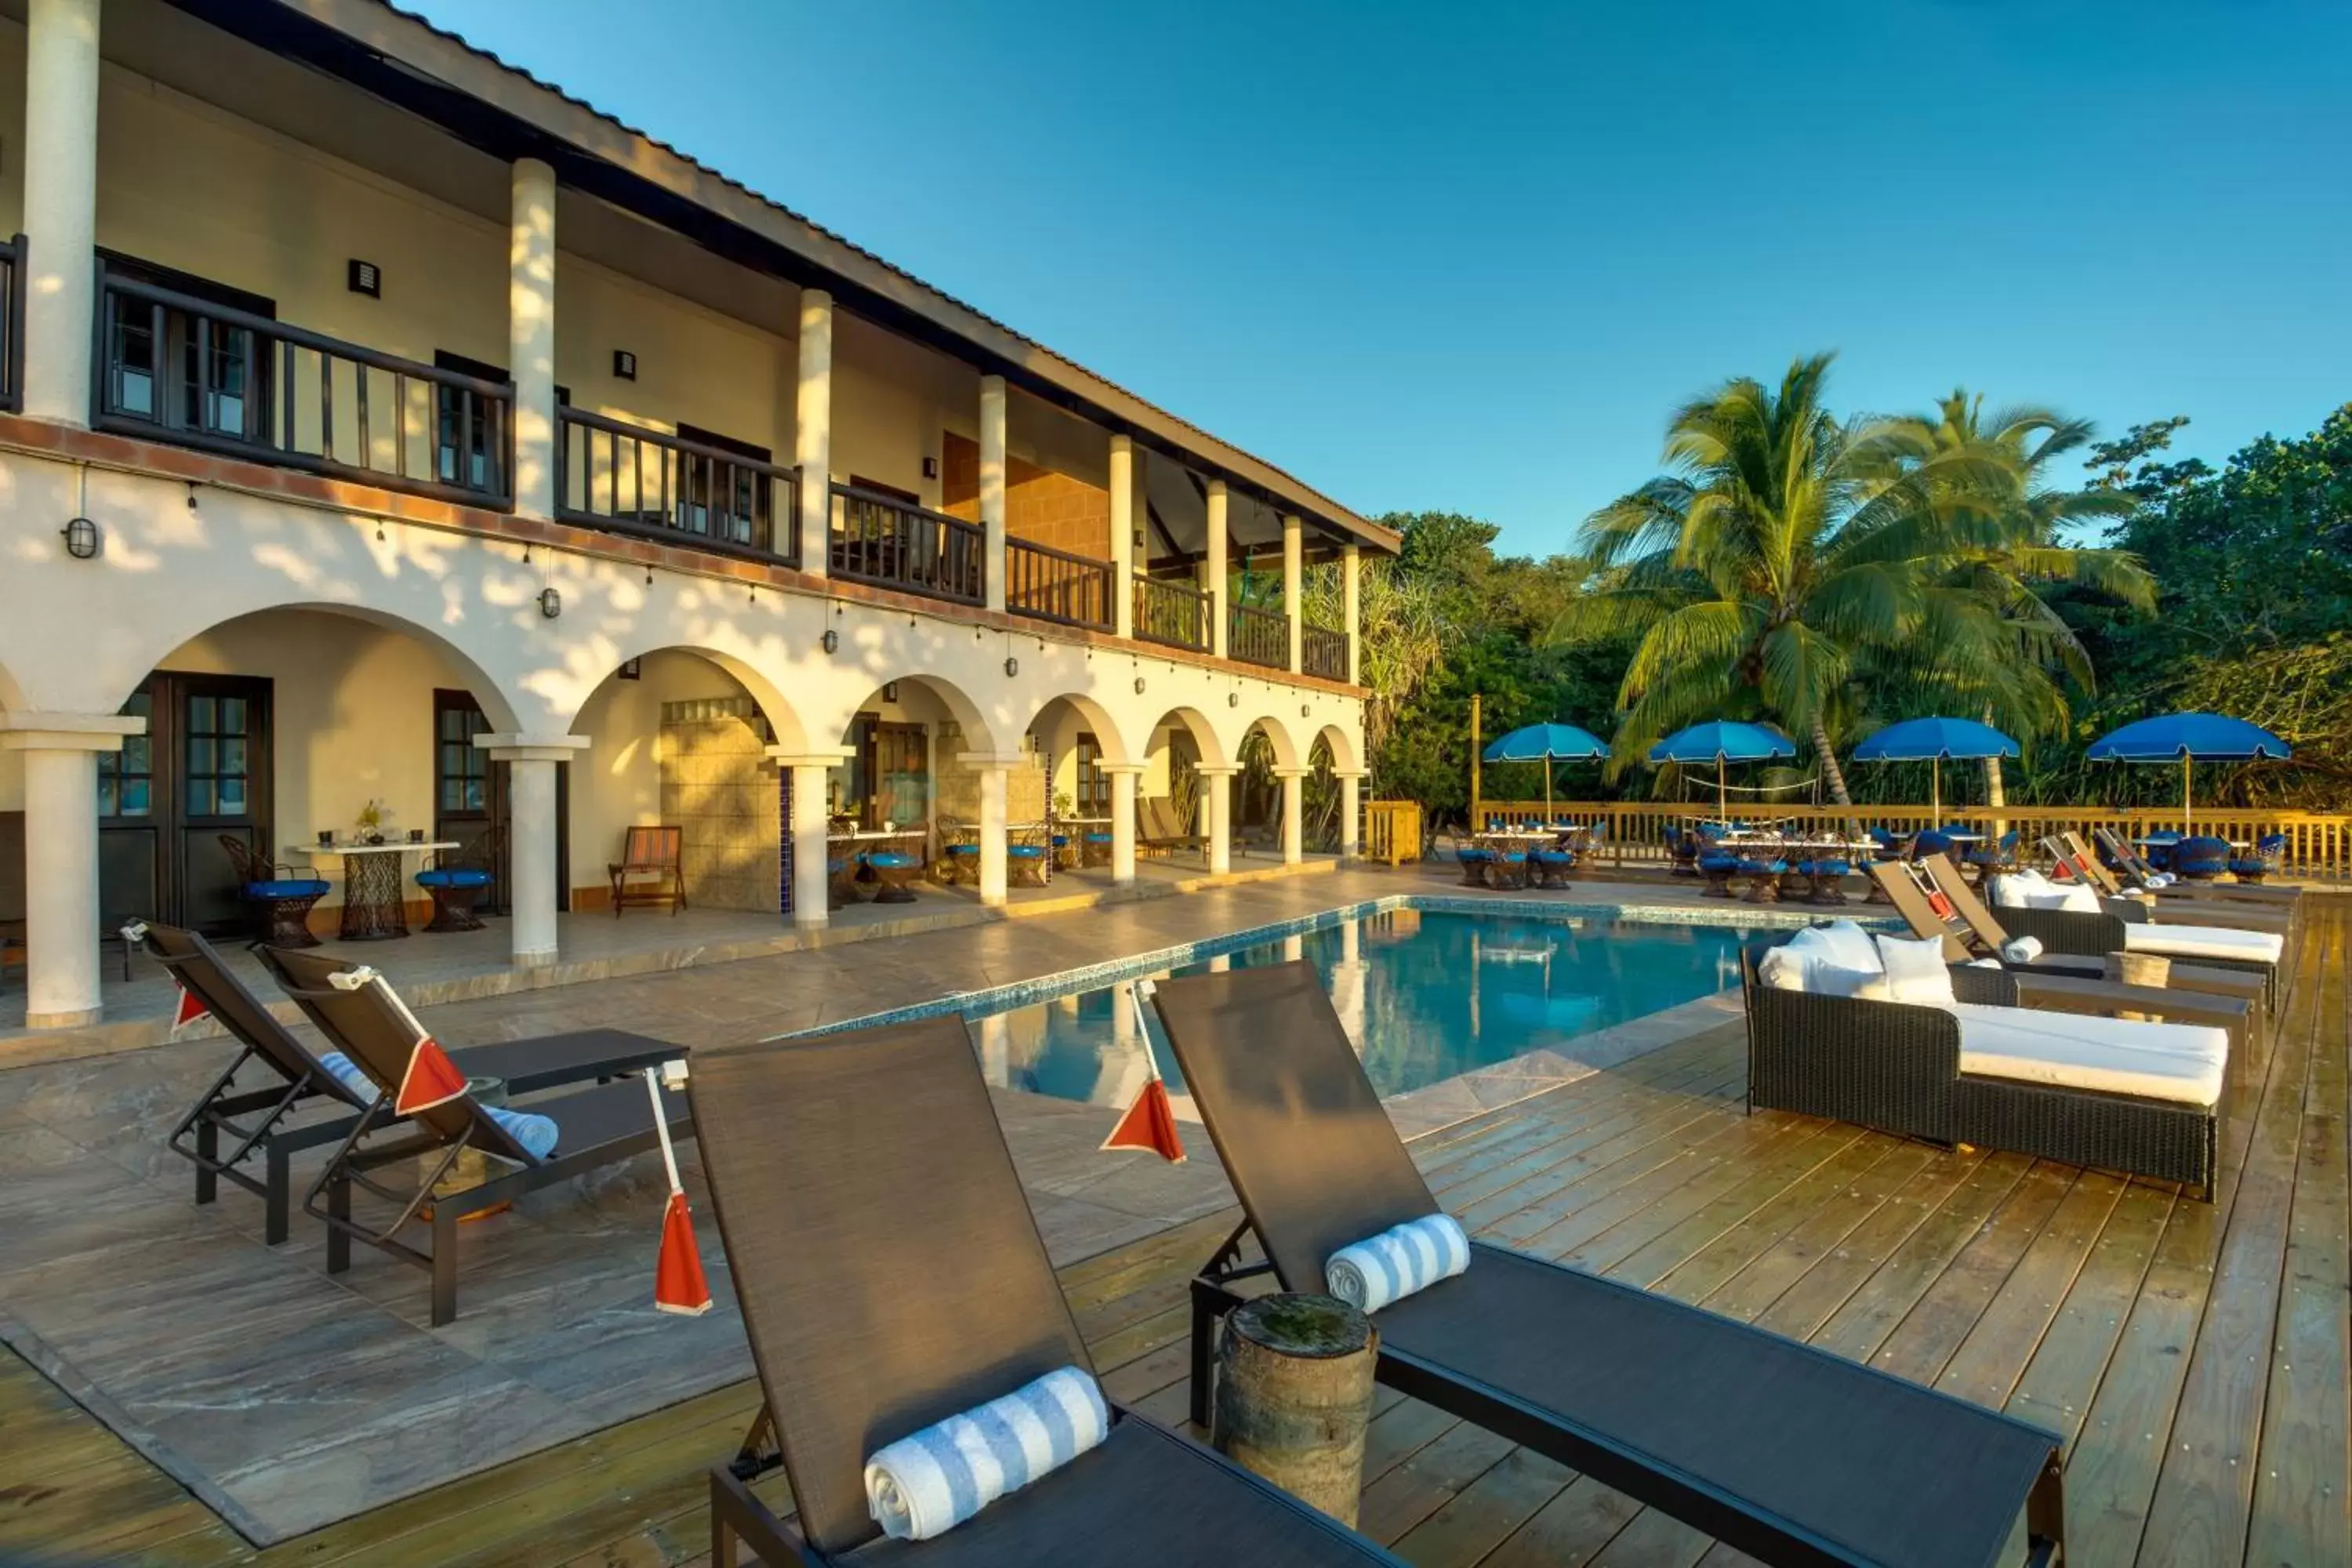 Property building, Swimming Pool in Mariposa Belize Beach Resort